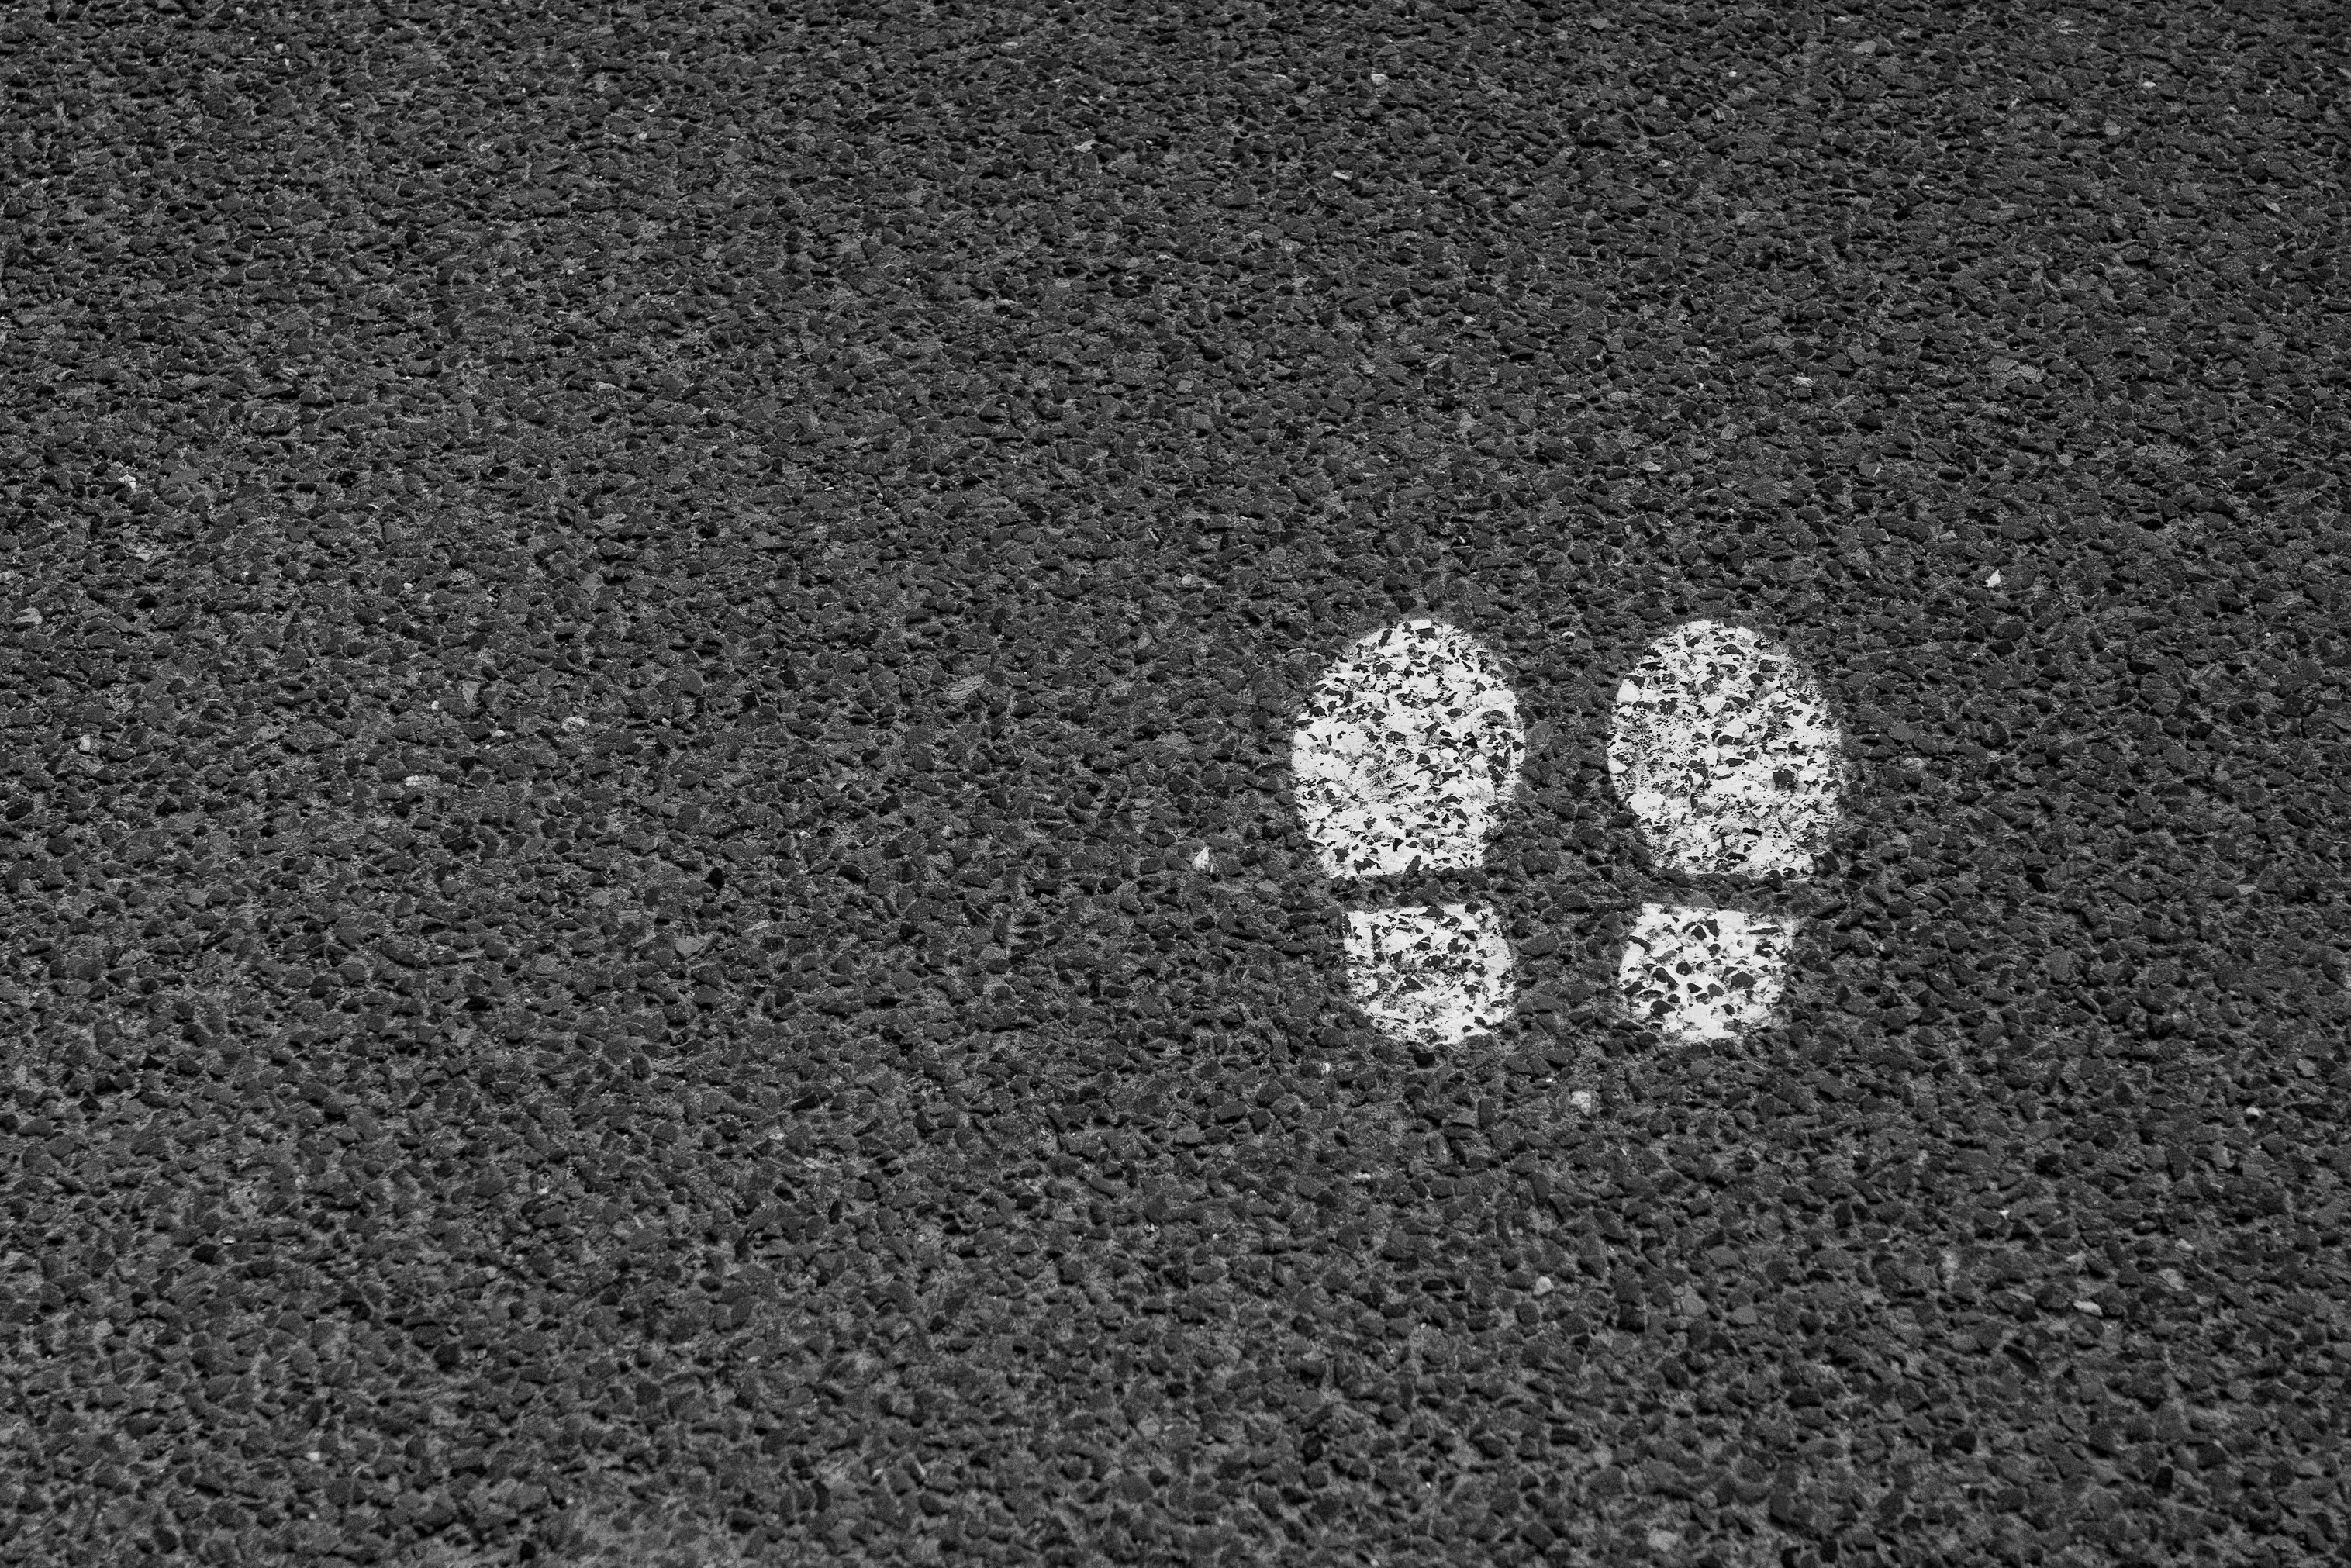 2 heart shaped on gray concrete floor